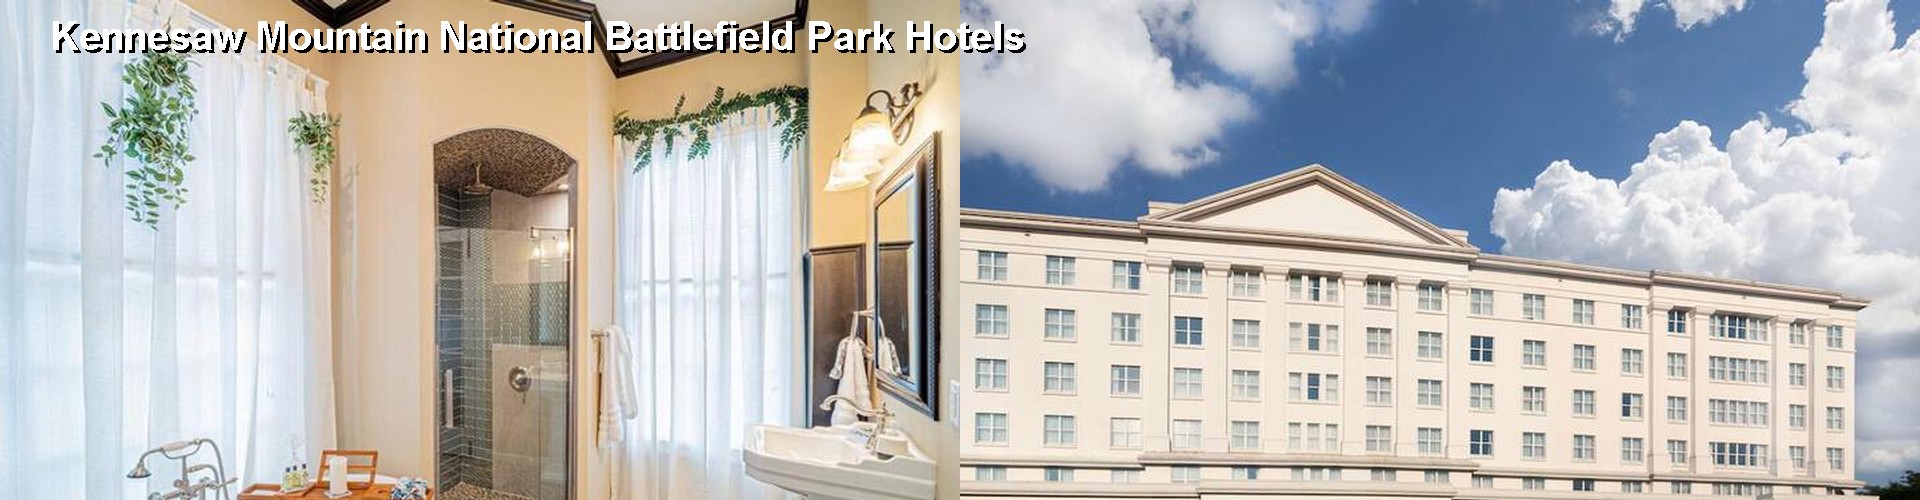 5 Best Hotels near Kennesaw Mountain National Battlefield Park